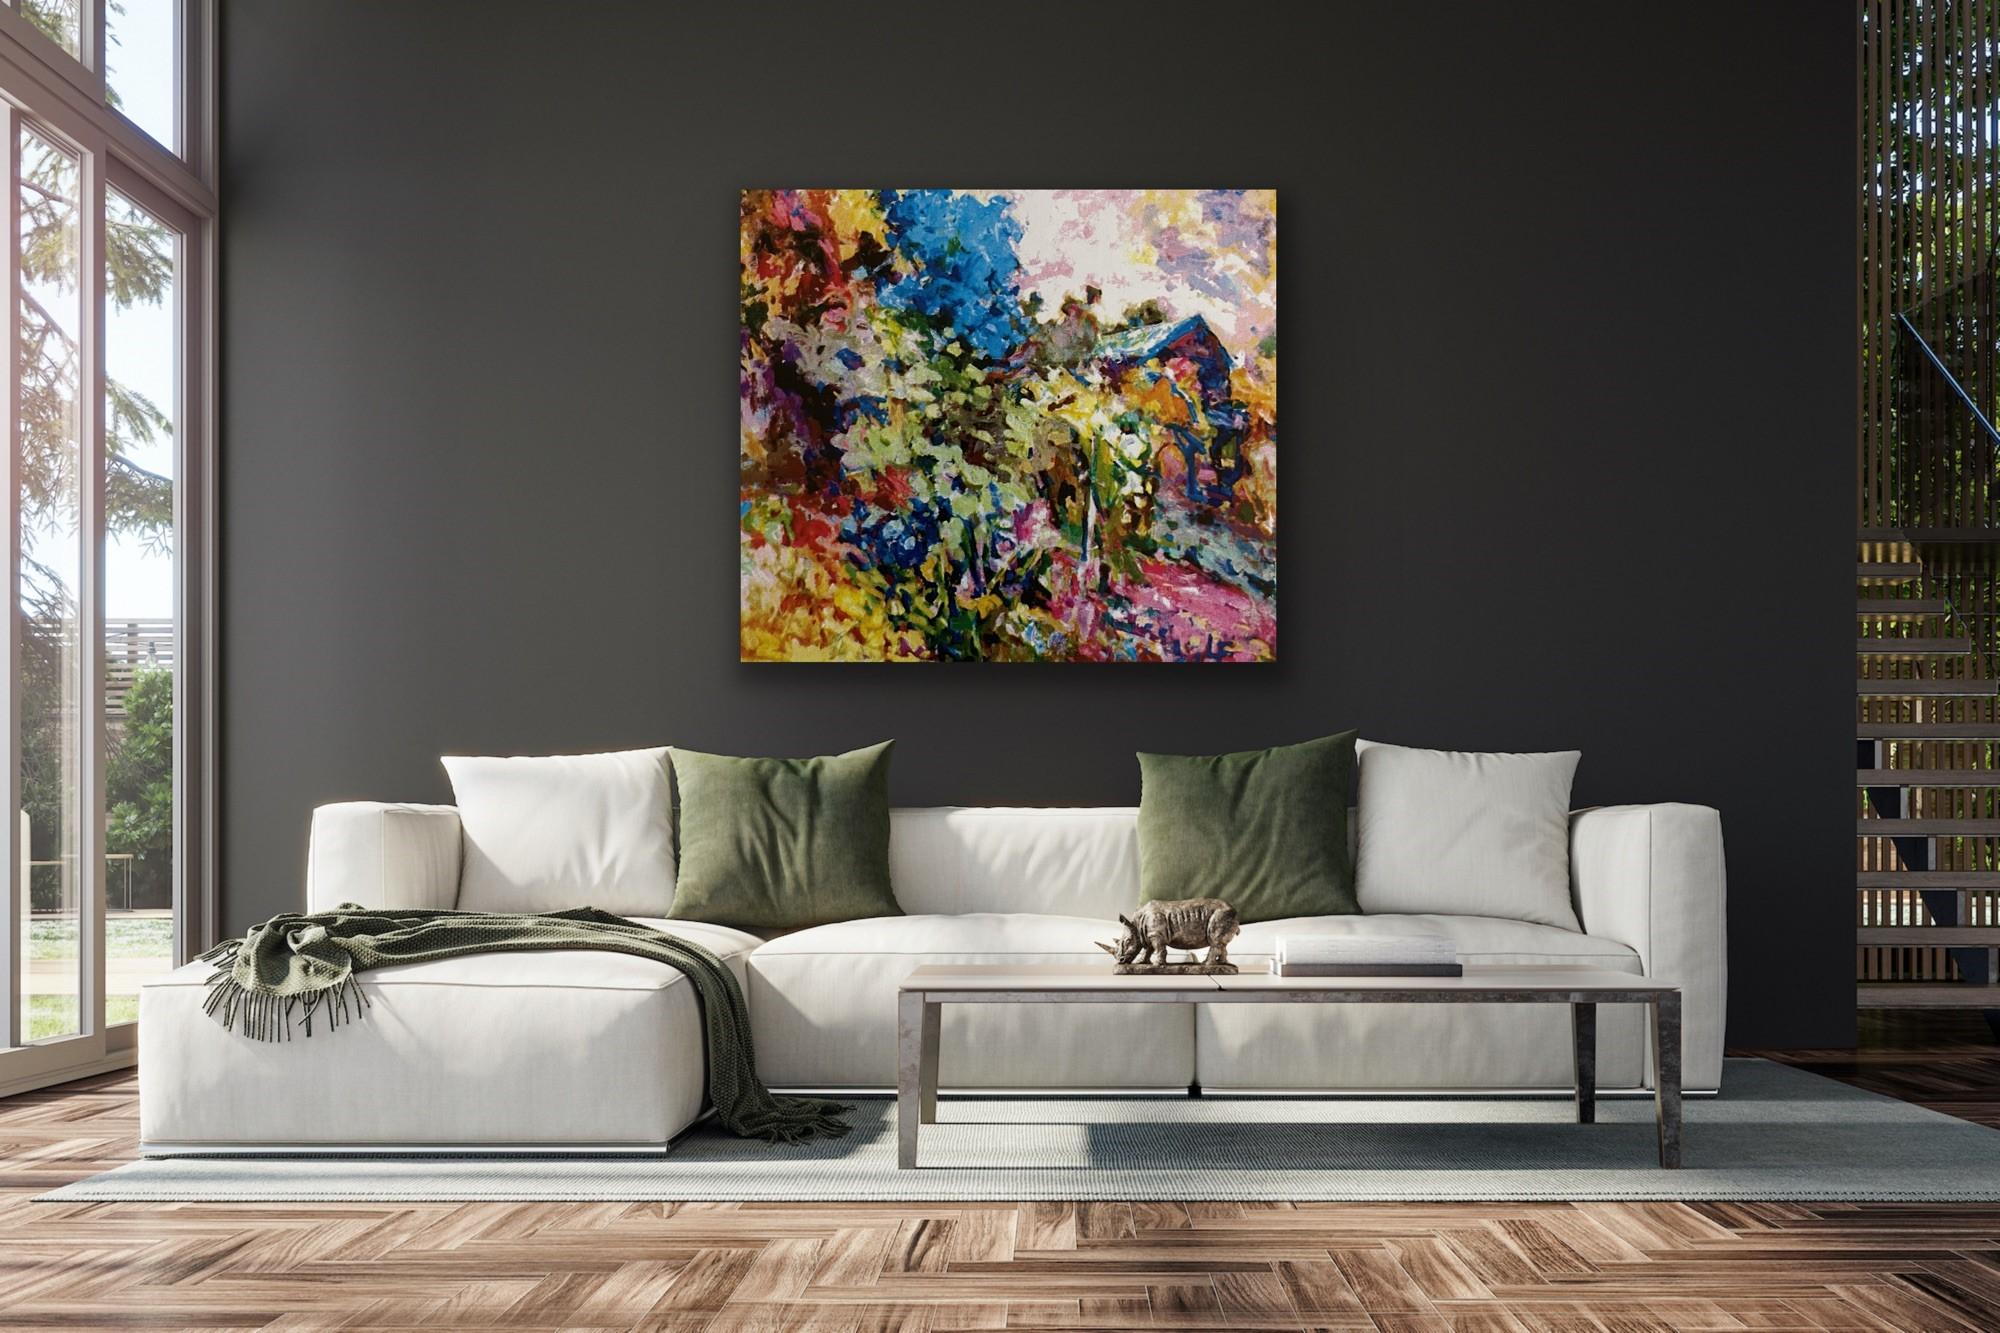 Summer, 40 x 45, oil on canvas, impressionist landscape, bright vivid colors